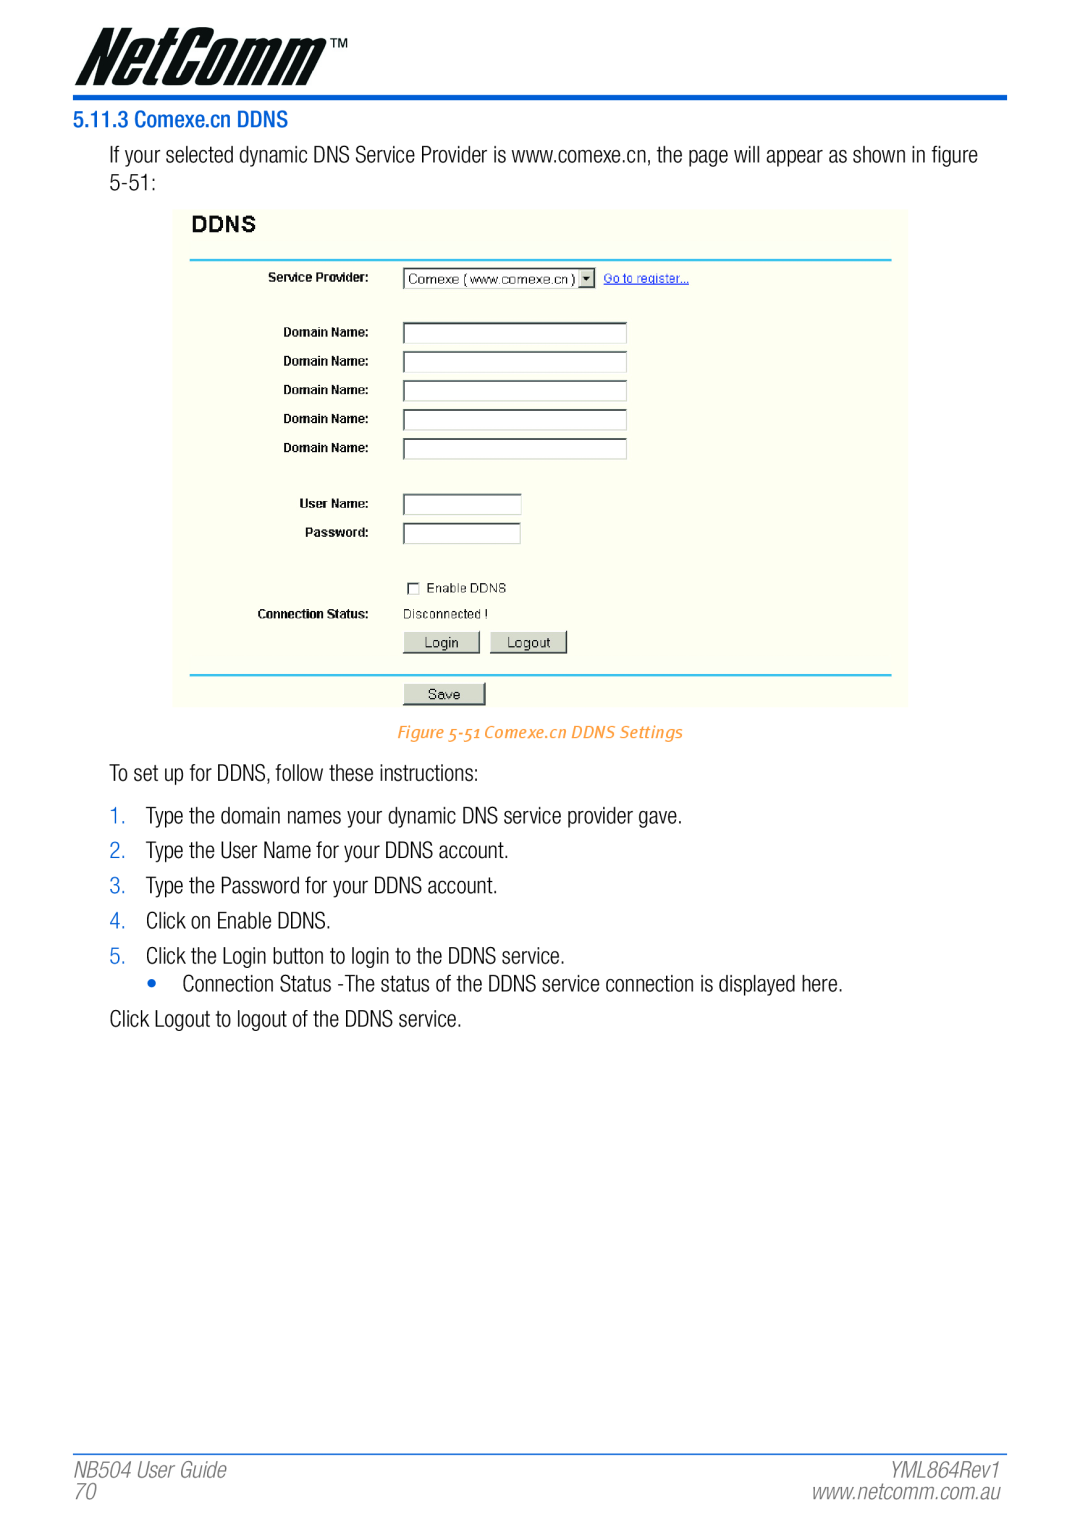 NetComm manual NB504 User Guide, 51 Comexe.cn DDNS Settings 